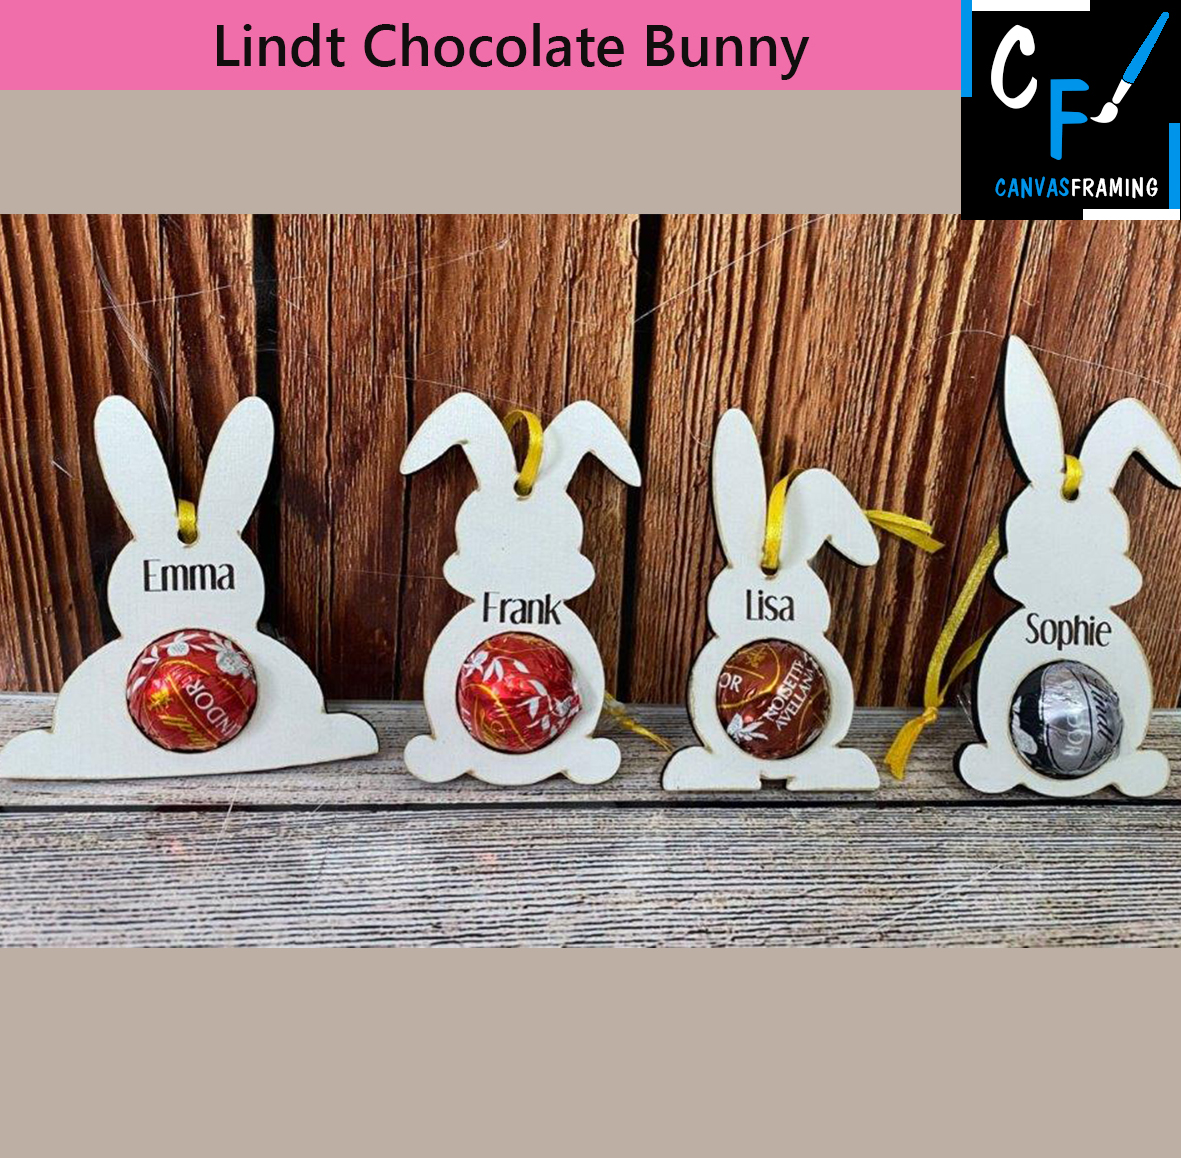 Lindt Chocolate Ball Bunny